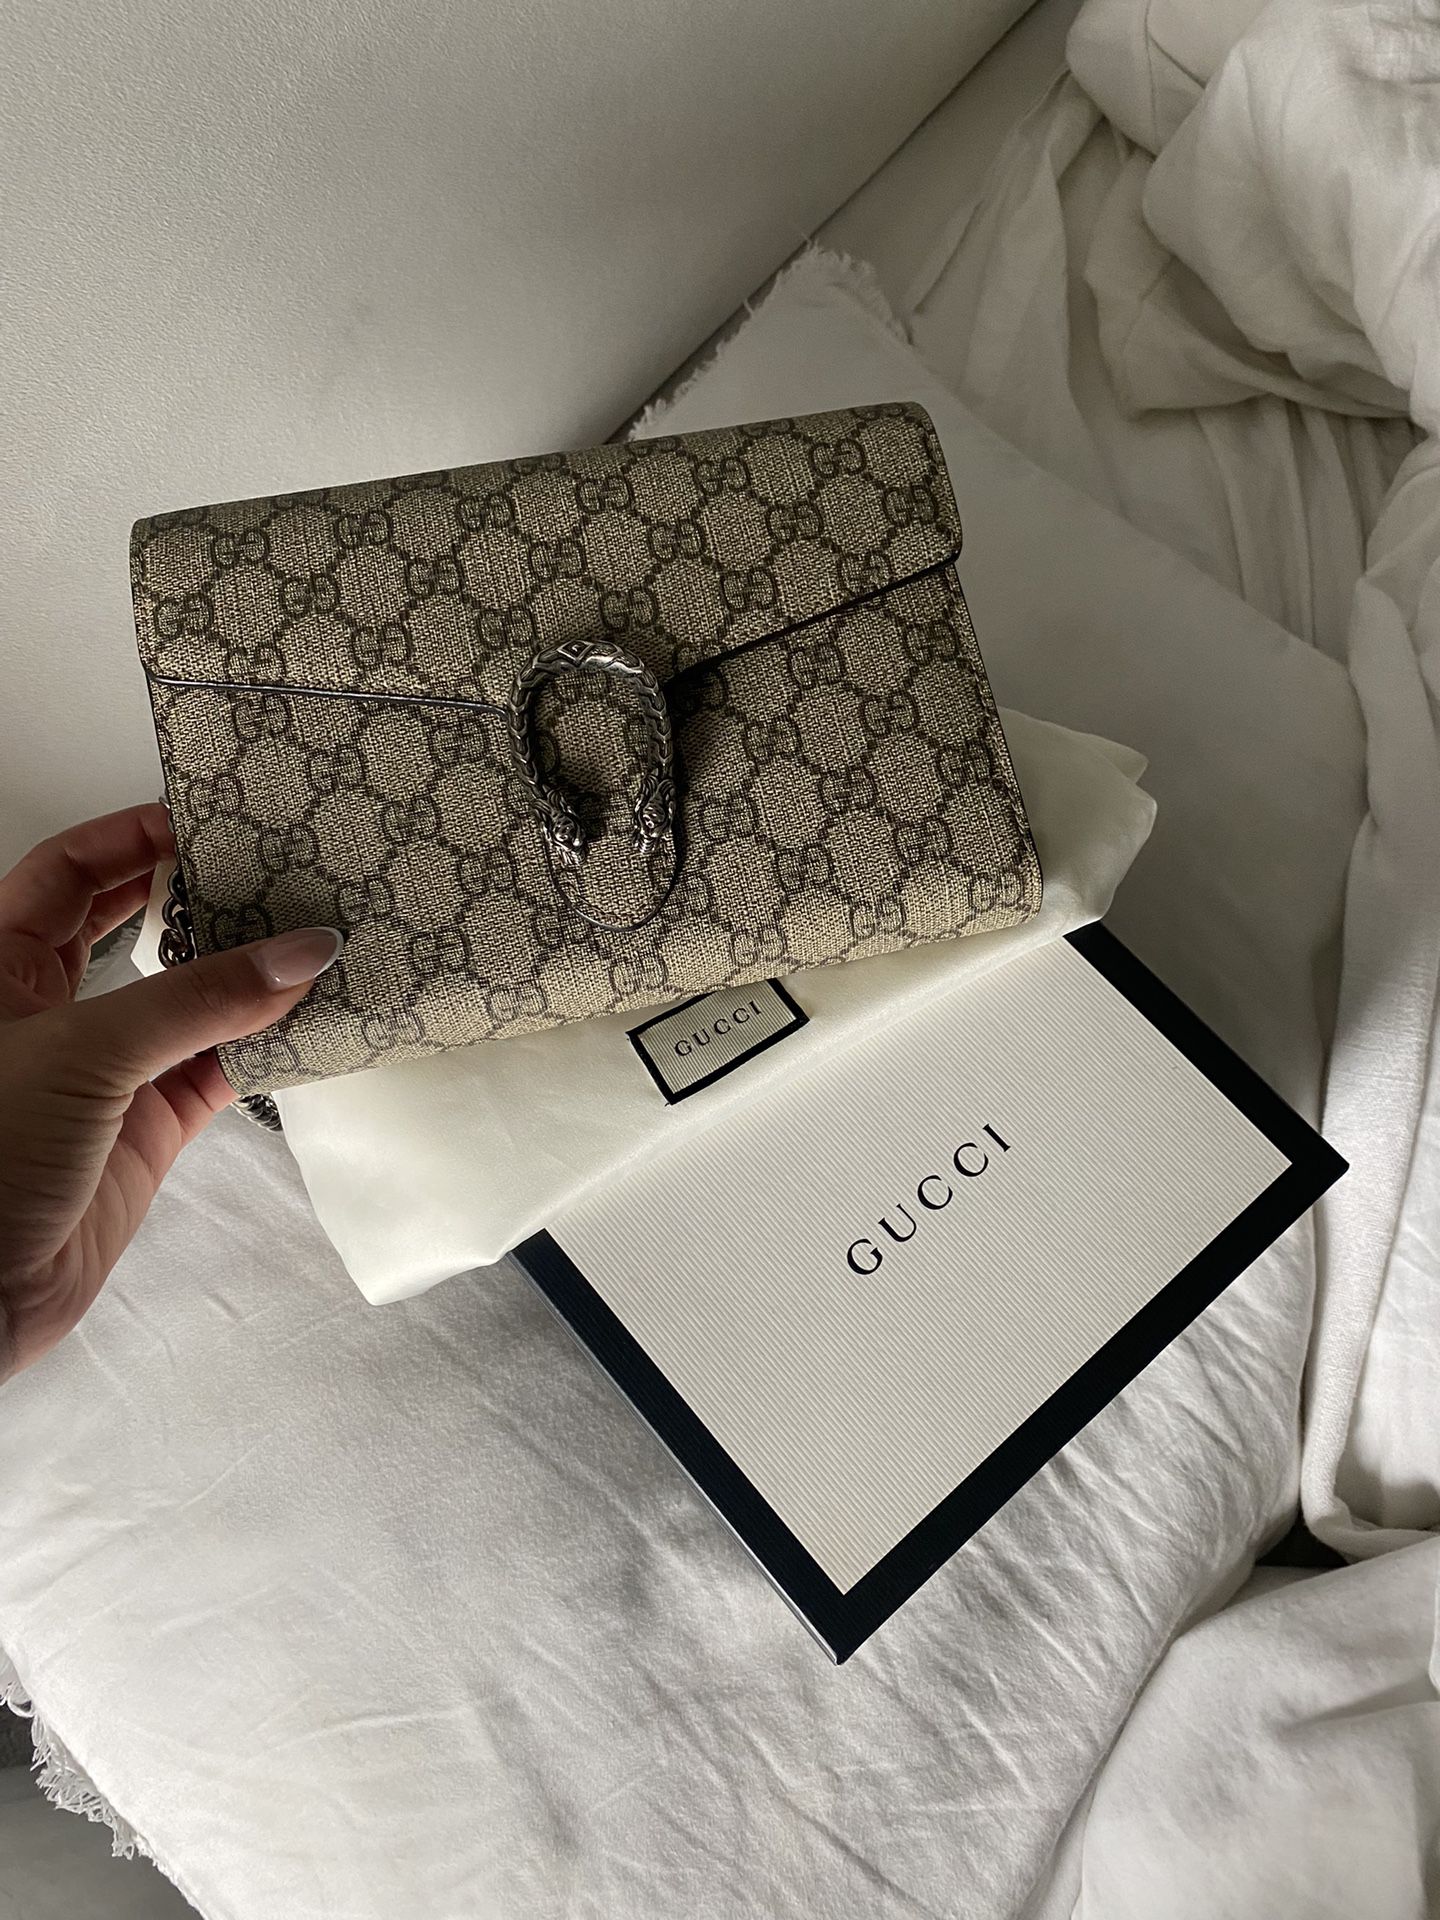 Gucci Dionysus GG Supreme Chain Wallet